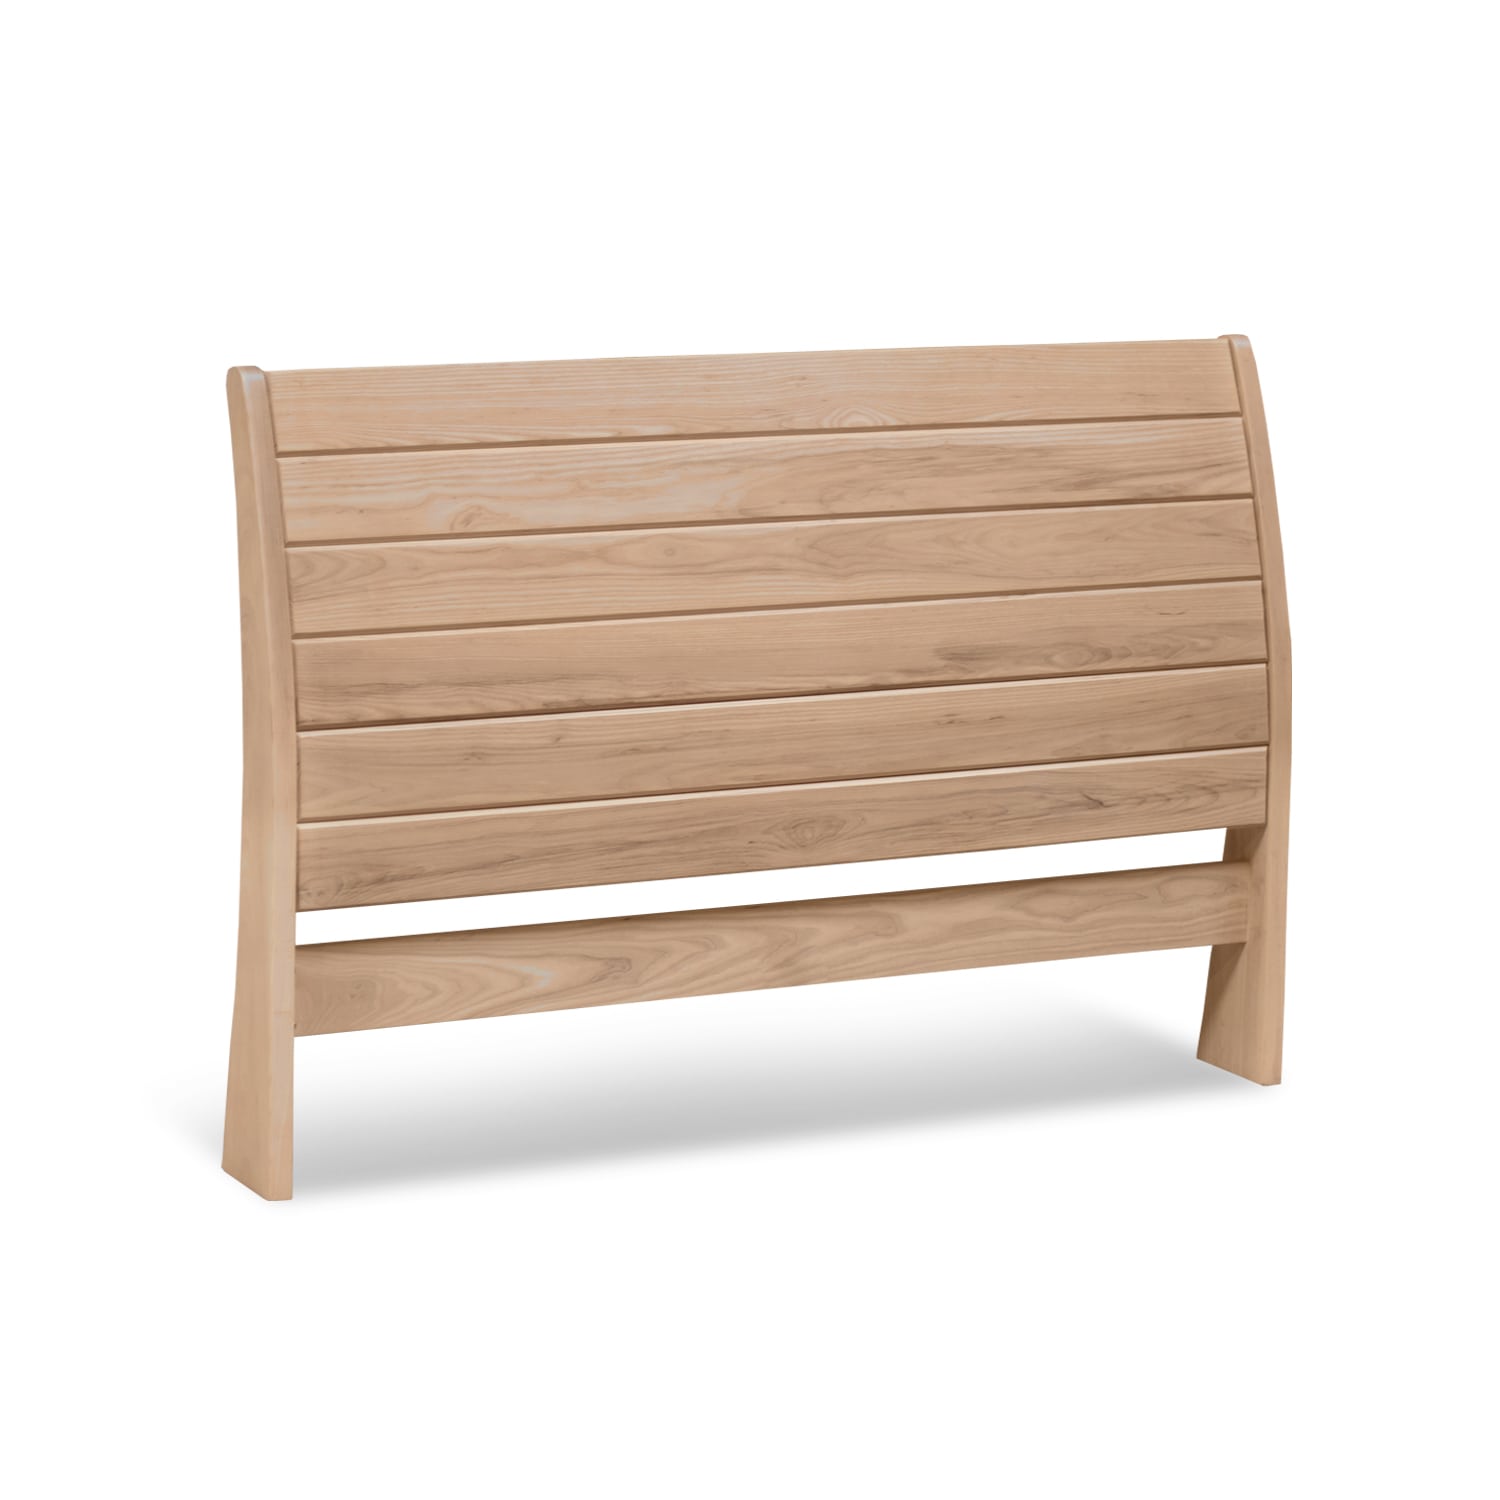 Woodlands Headboard - Quality Solid Wood Headboards Furniture